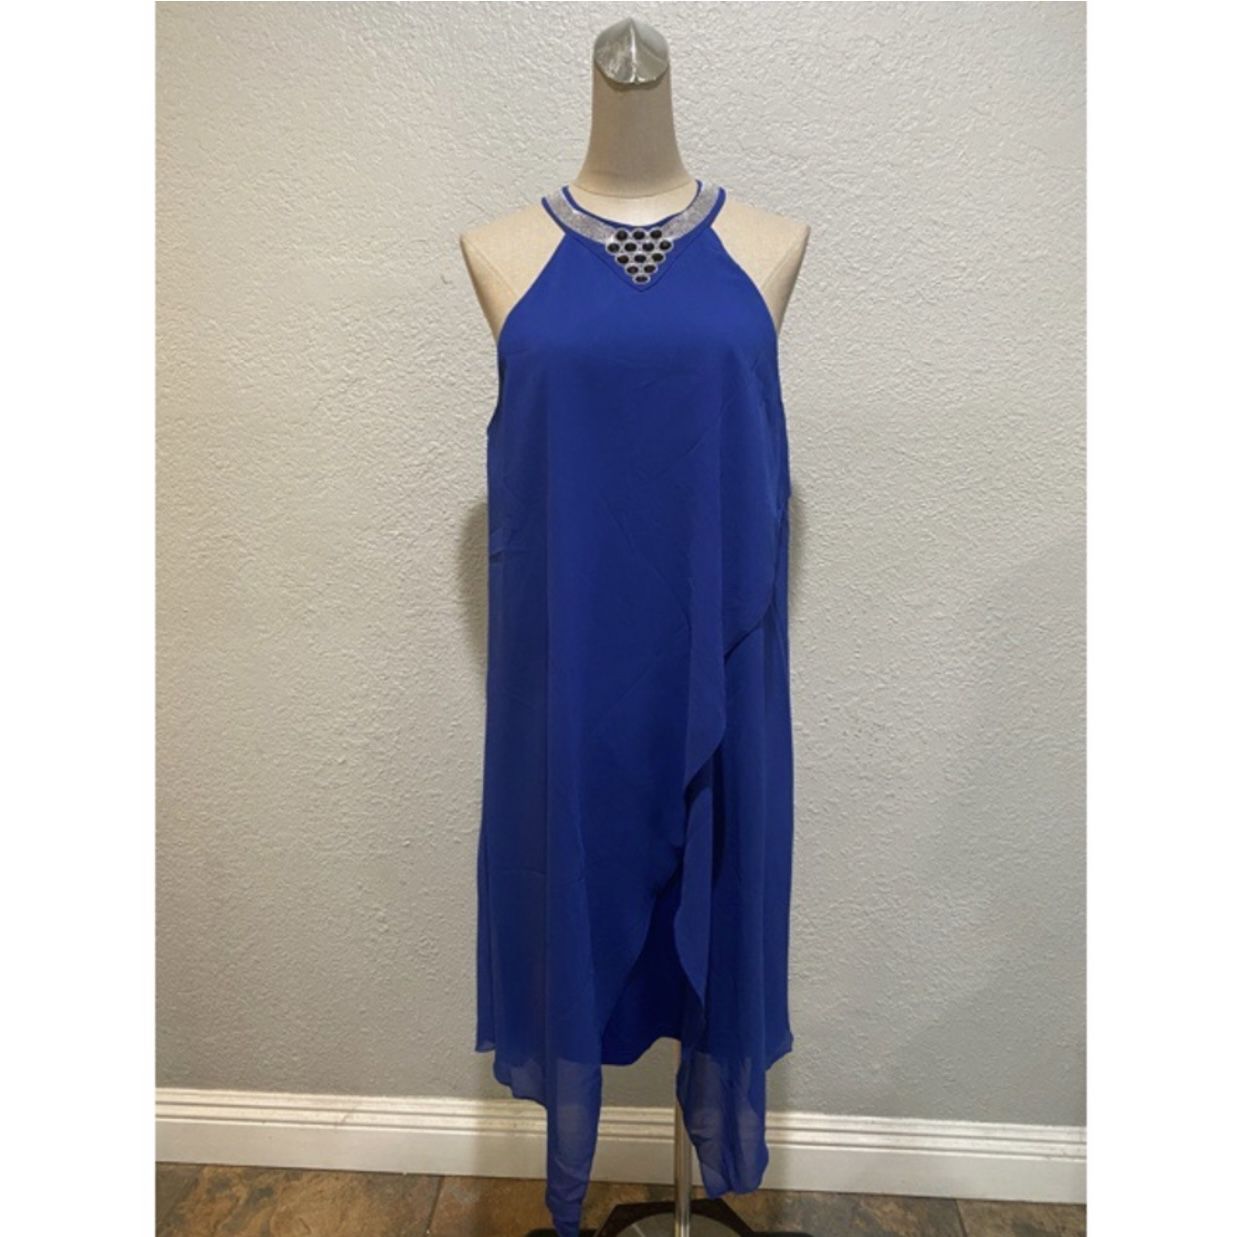 Stunning Flowy Royal Blue Dress M